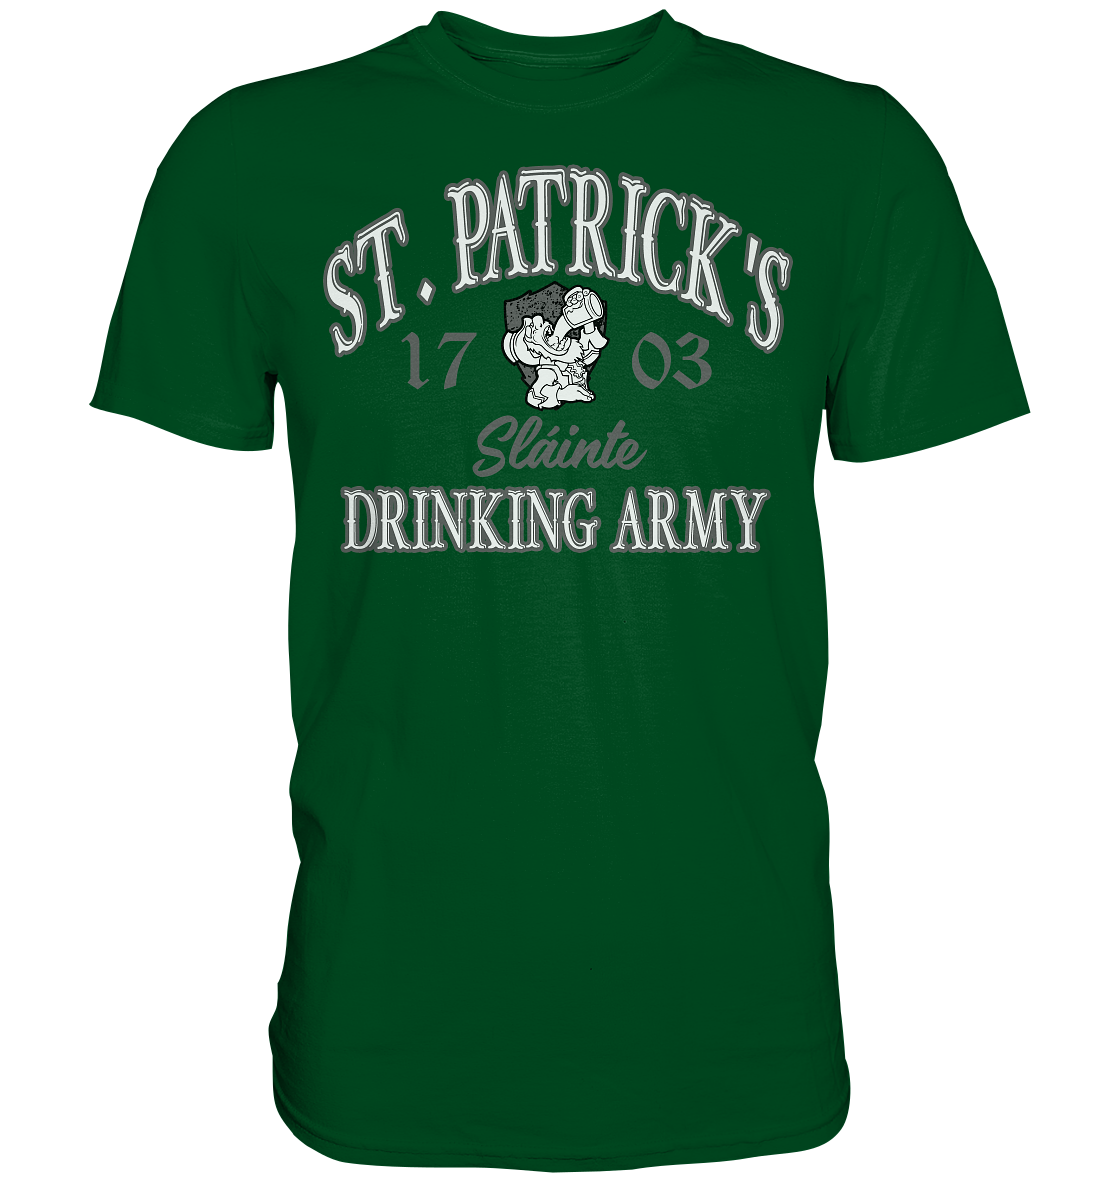 St. Patrick's Drinking Army "Sláinte" - Premium Shirt